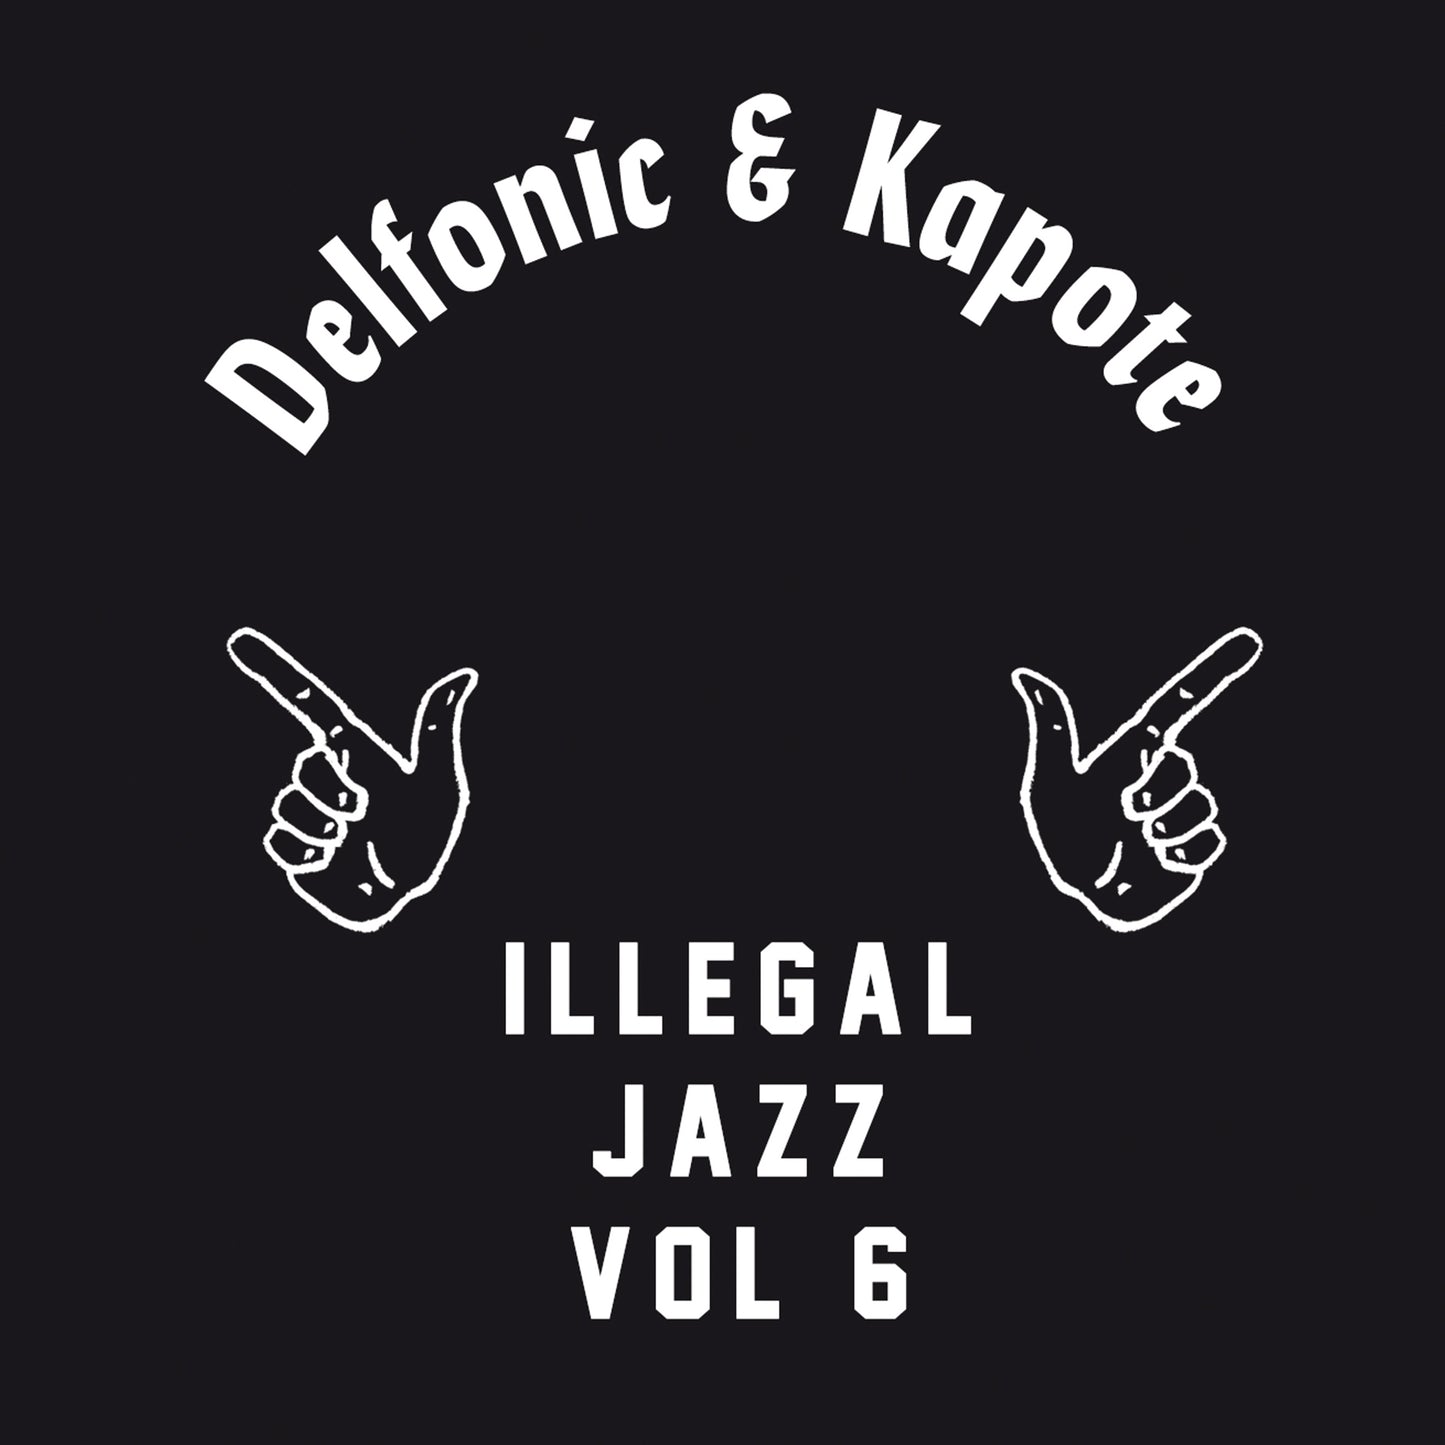 Delfonic & Kapote - Illegal Jazz Vol. 6 (12" Vinyl)